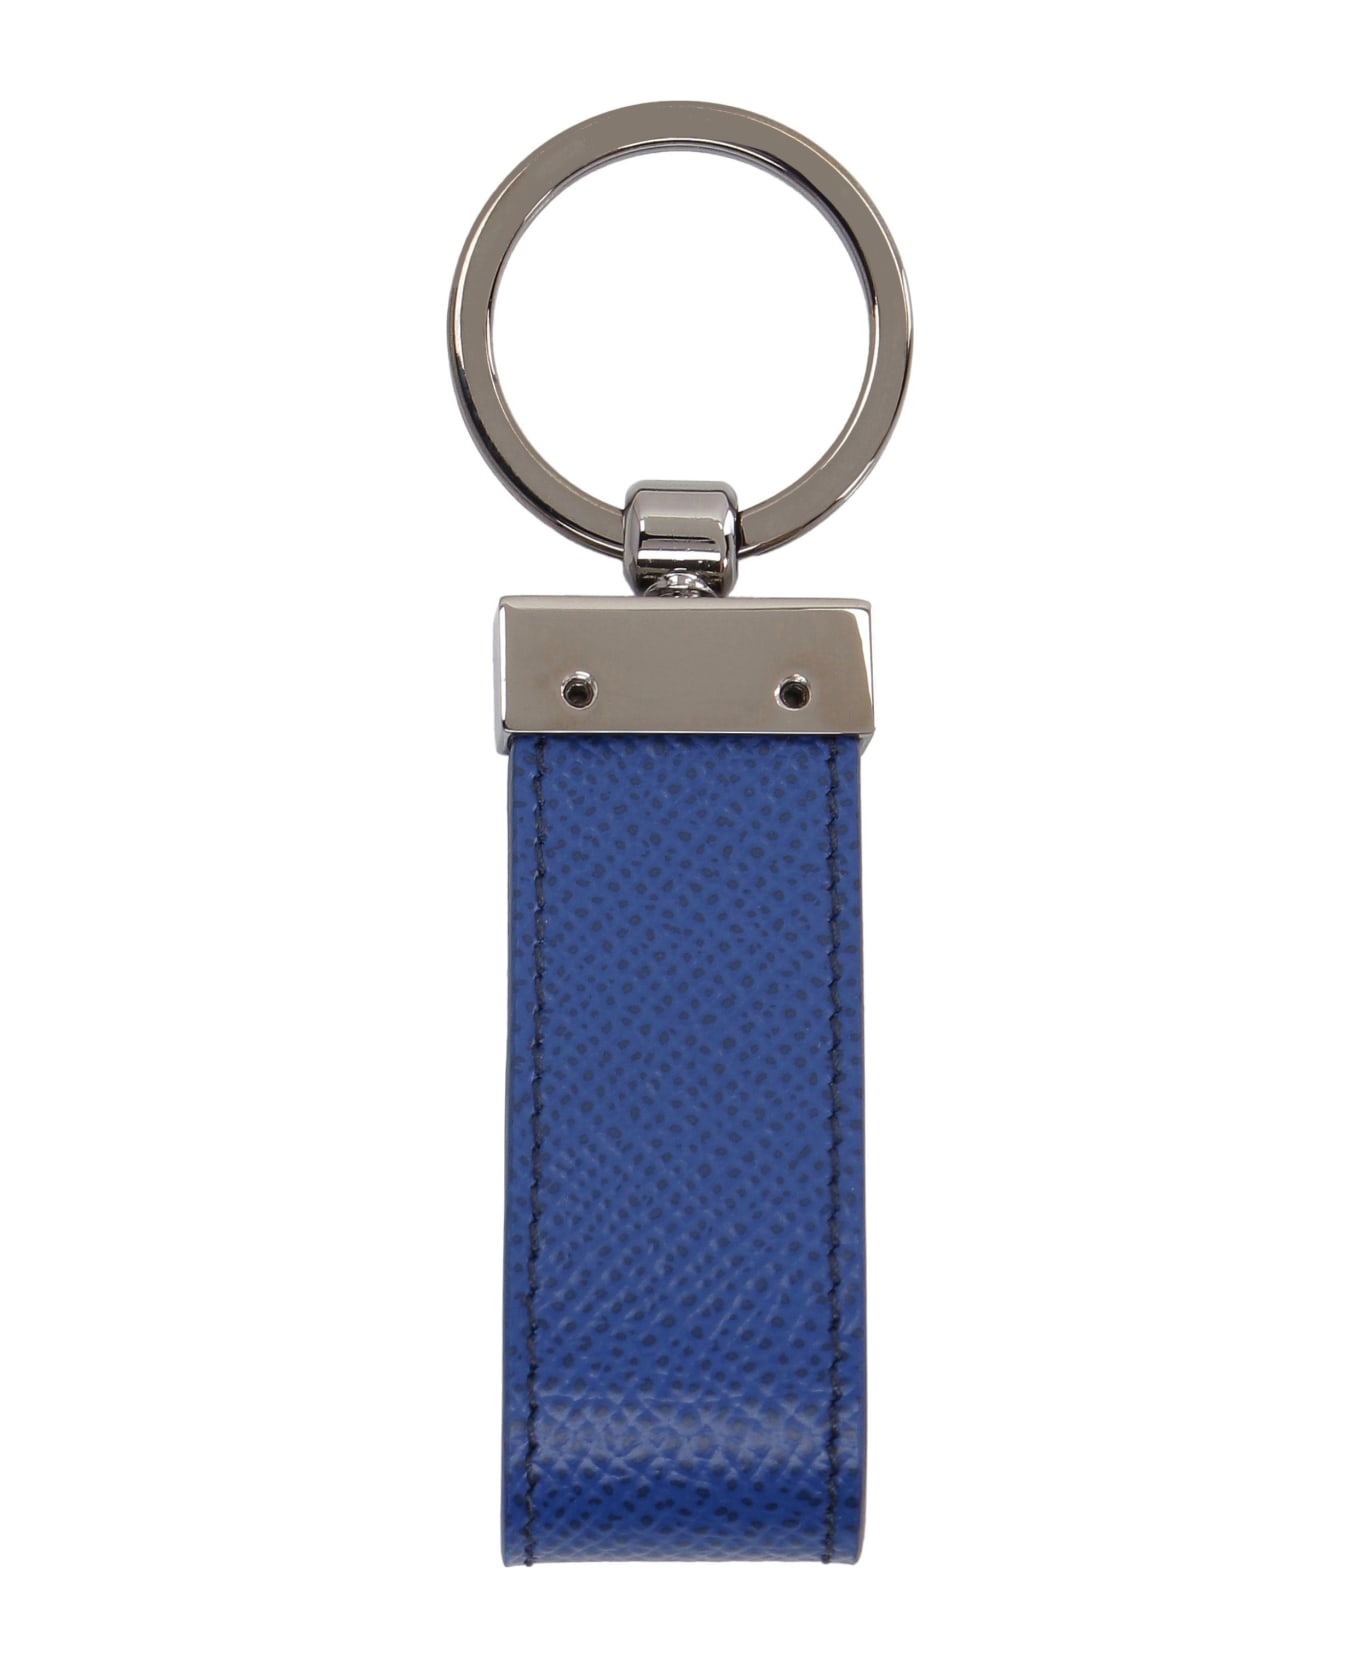 Dolce & Gabbana Leather Keyring - Blu marino